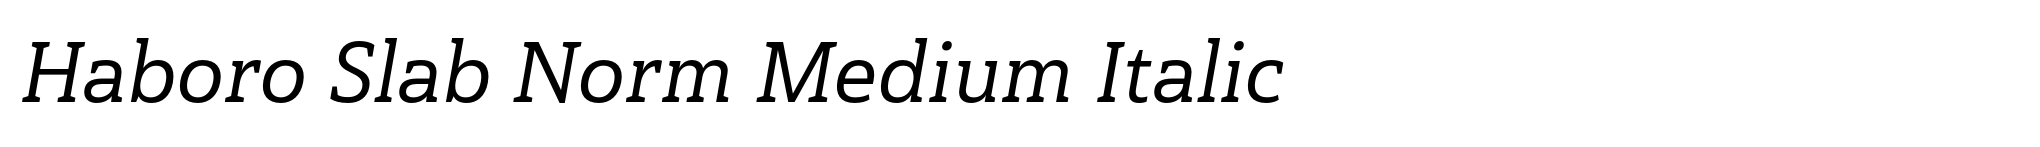 Haboro Slab Norm Medium Italic image